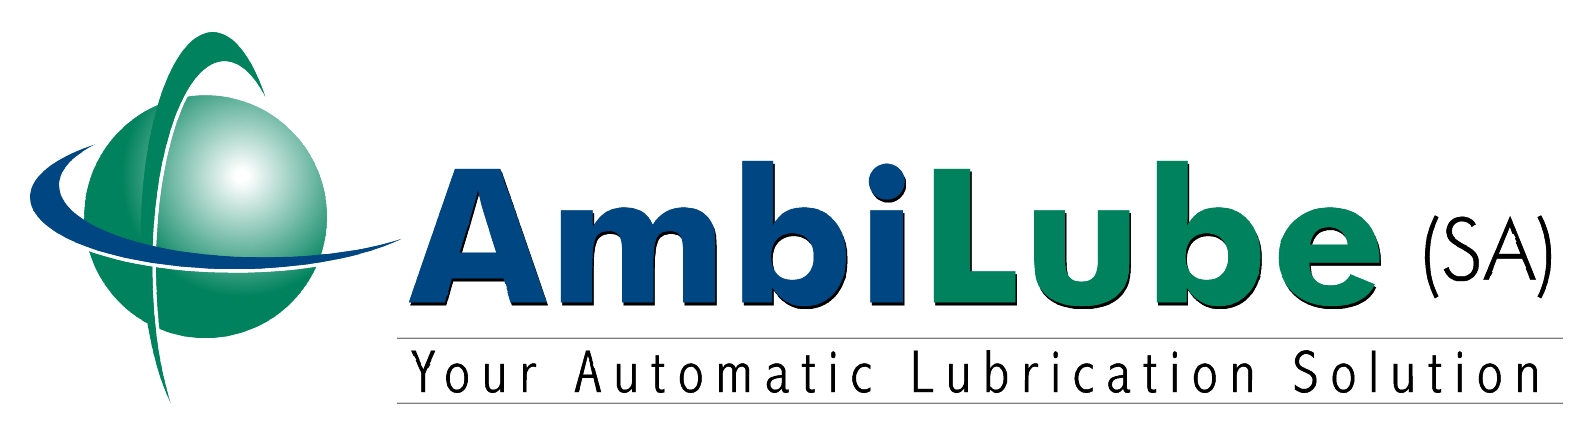 Ambi - lube (SA) cc logo